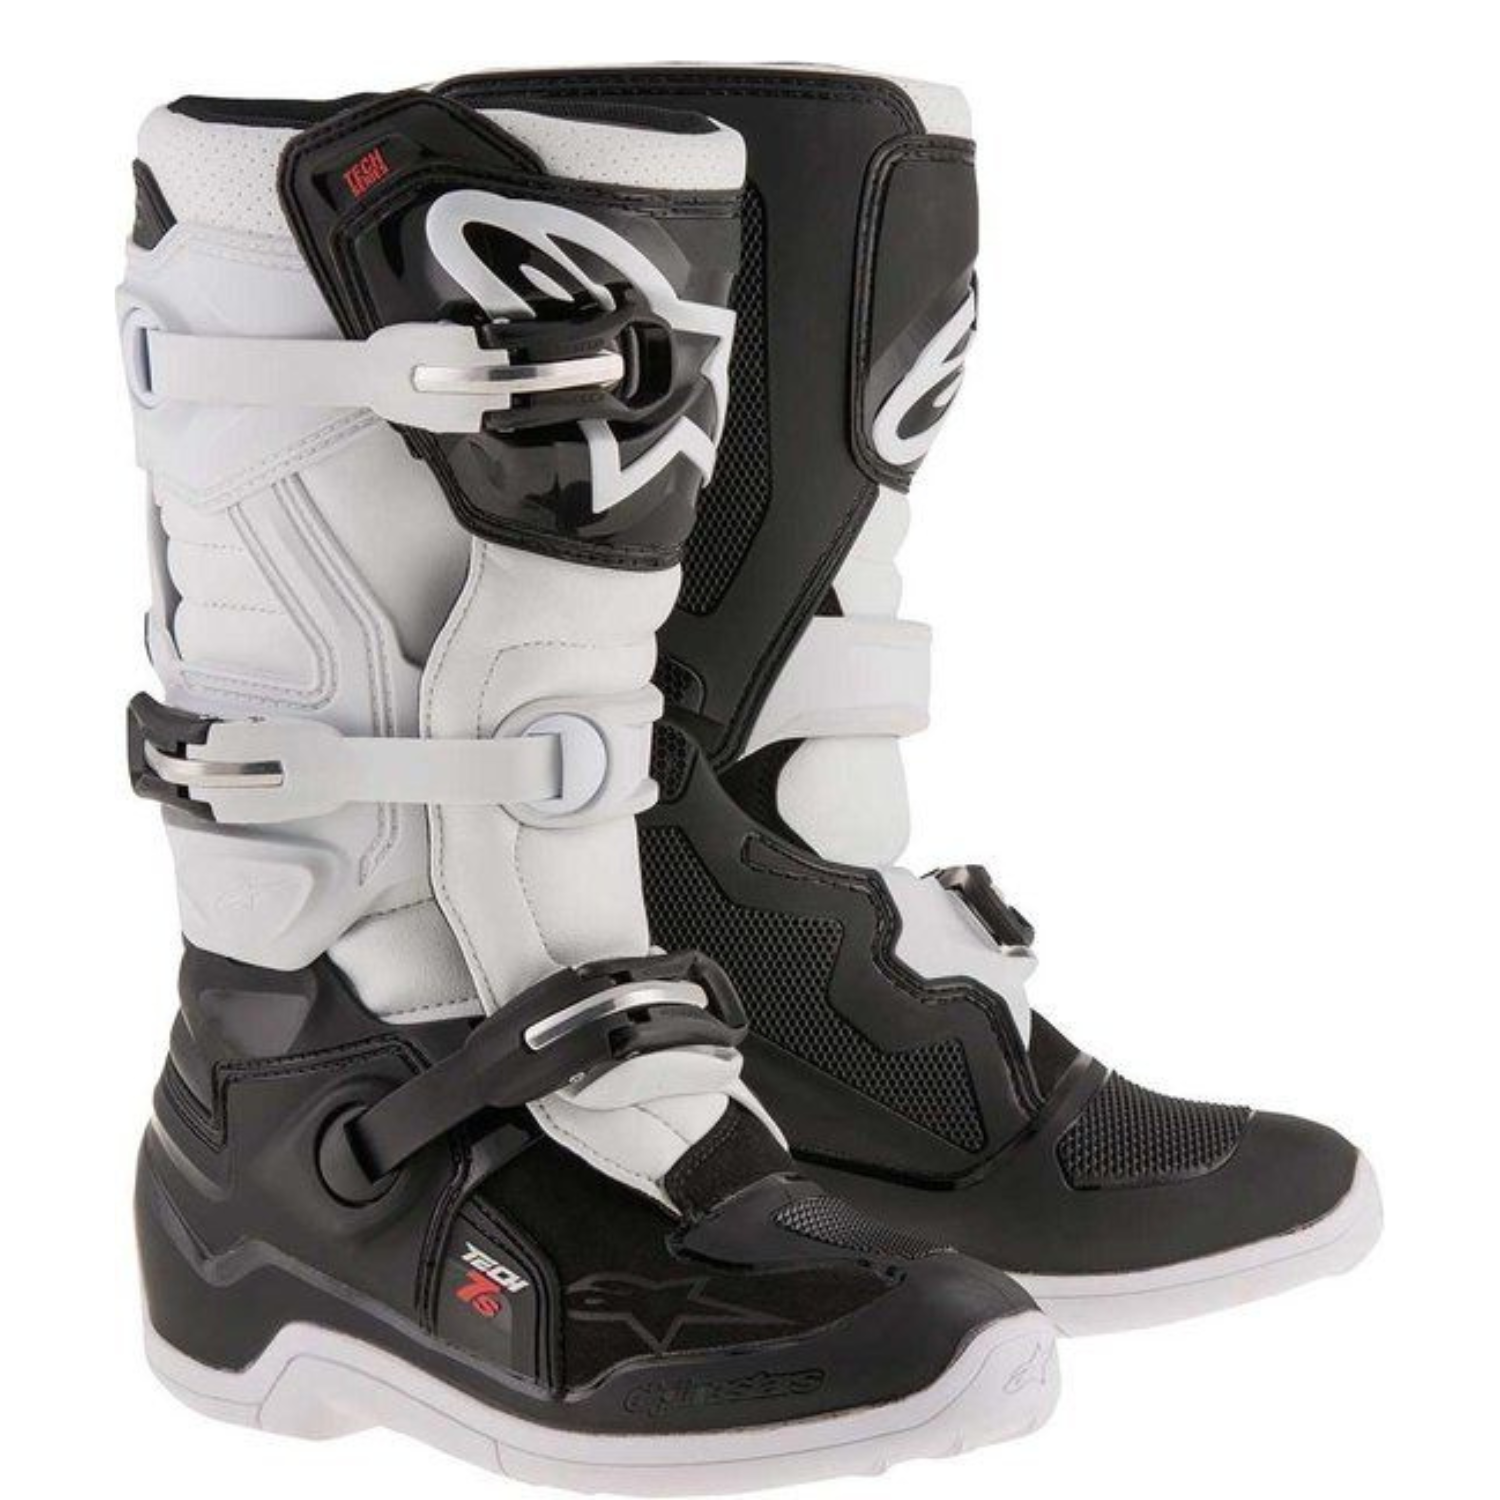 Image of Alpinestars Tech 7 S Black White Boots Größe US 8